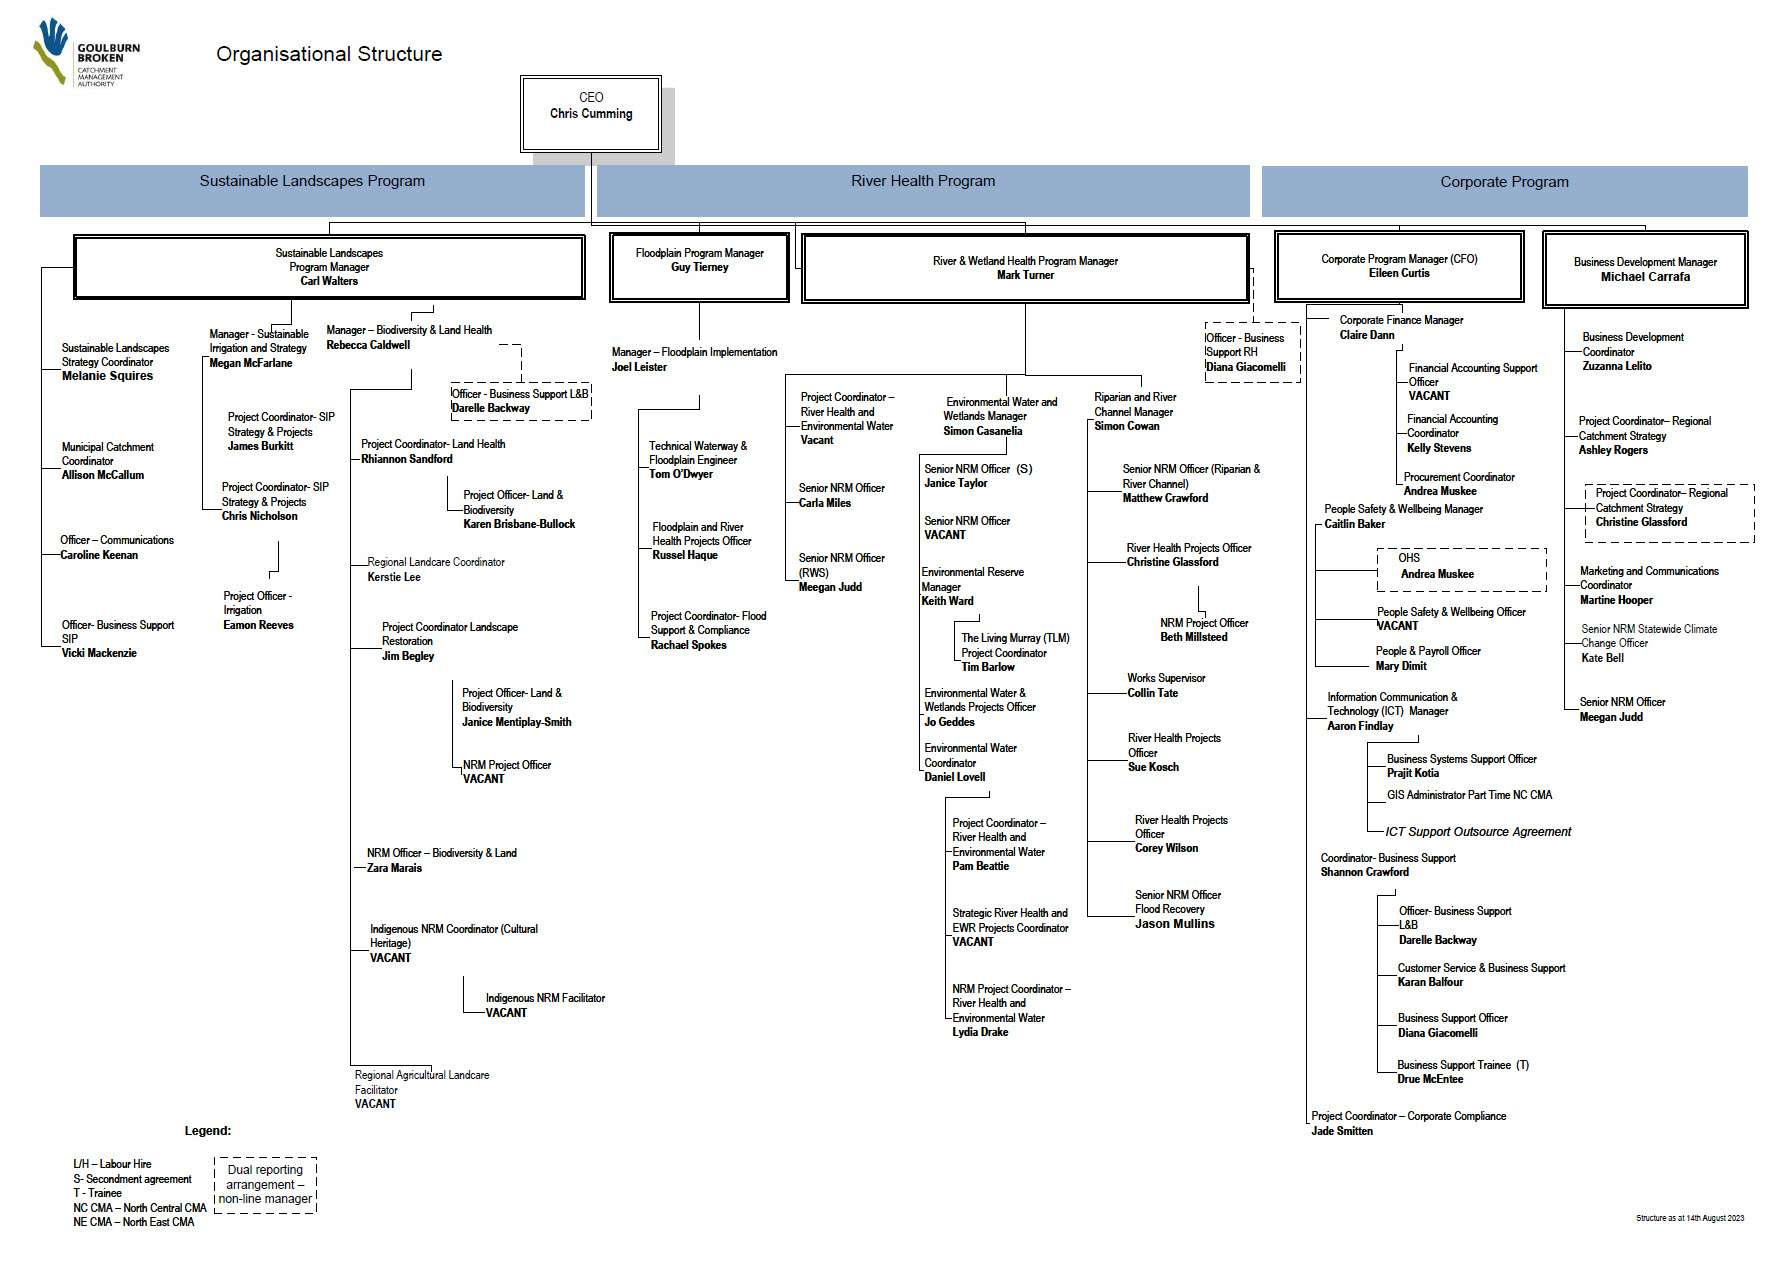 GBCMA organisational chart